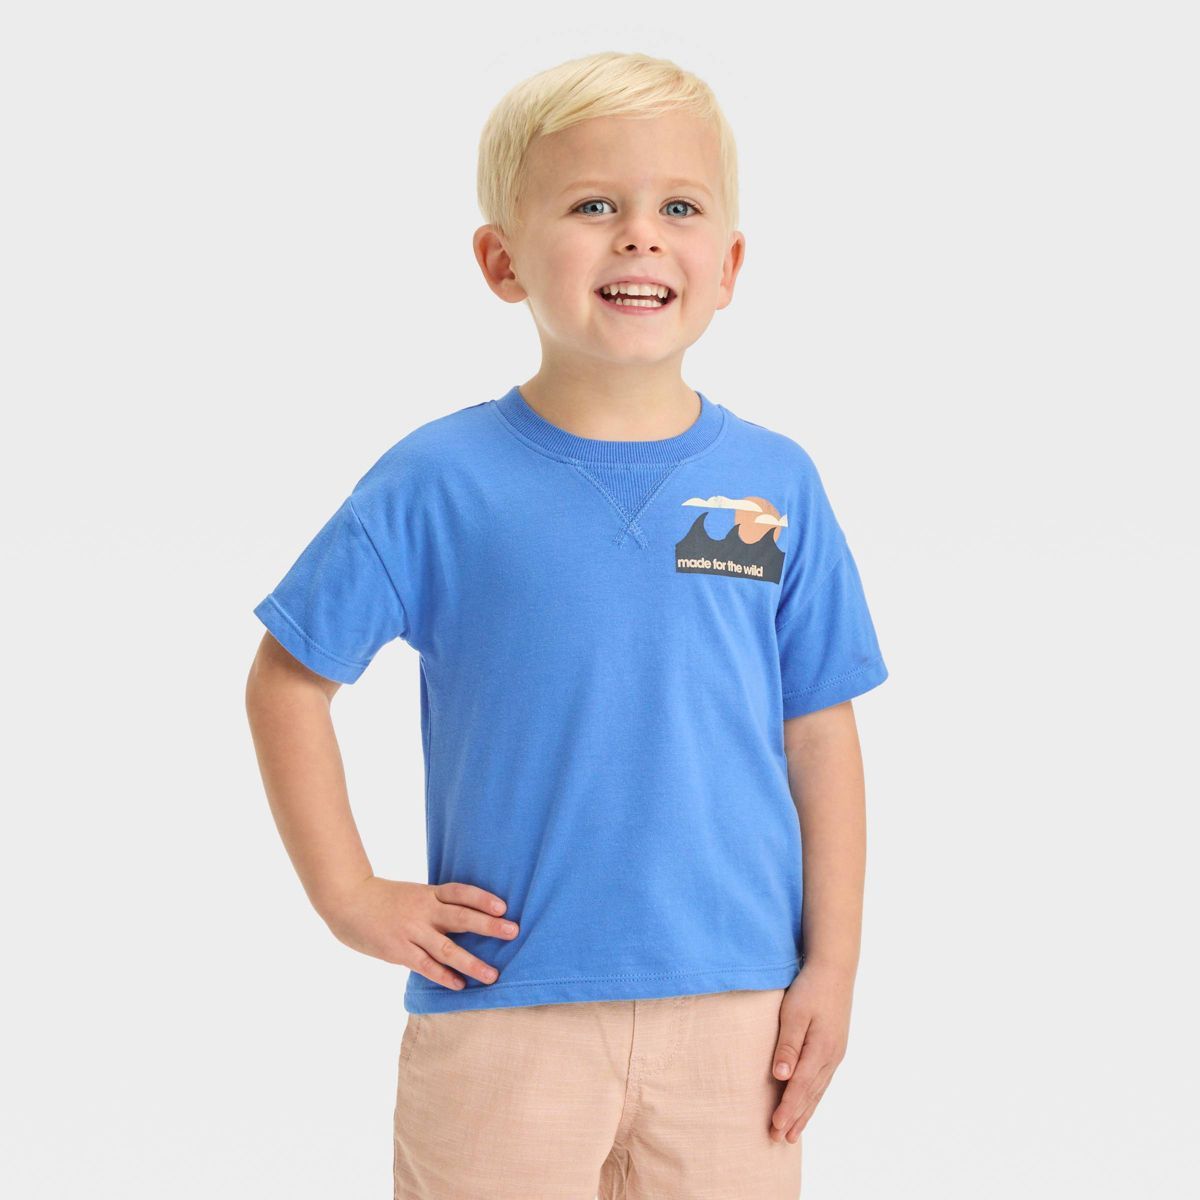 Grayson Mini Toddler Boys' Short Sleeve Jersey Graphic T-Shirt - Blue | Target